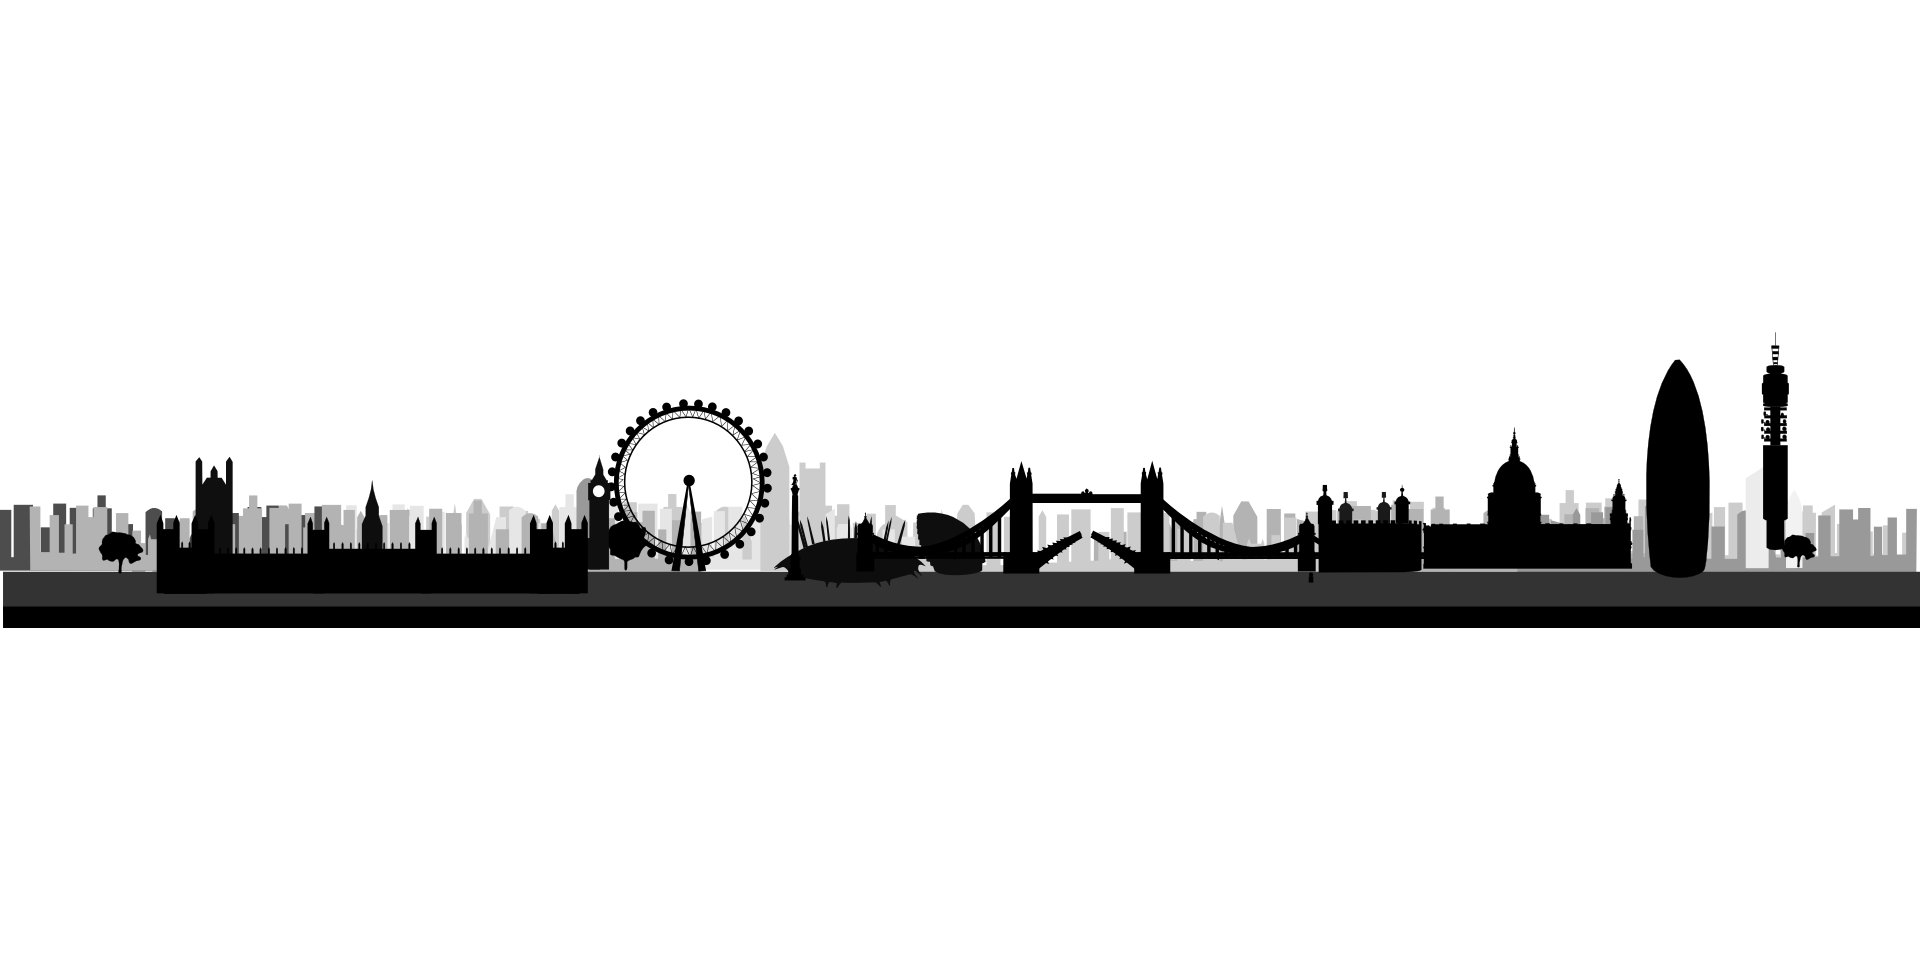 London panorama with landmarks, illustration free image